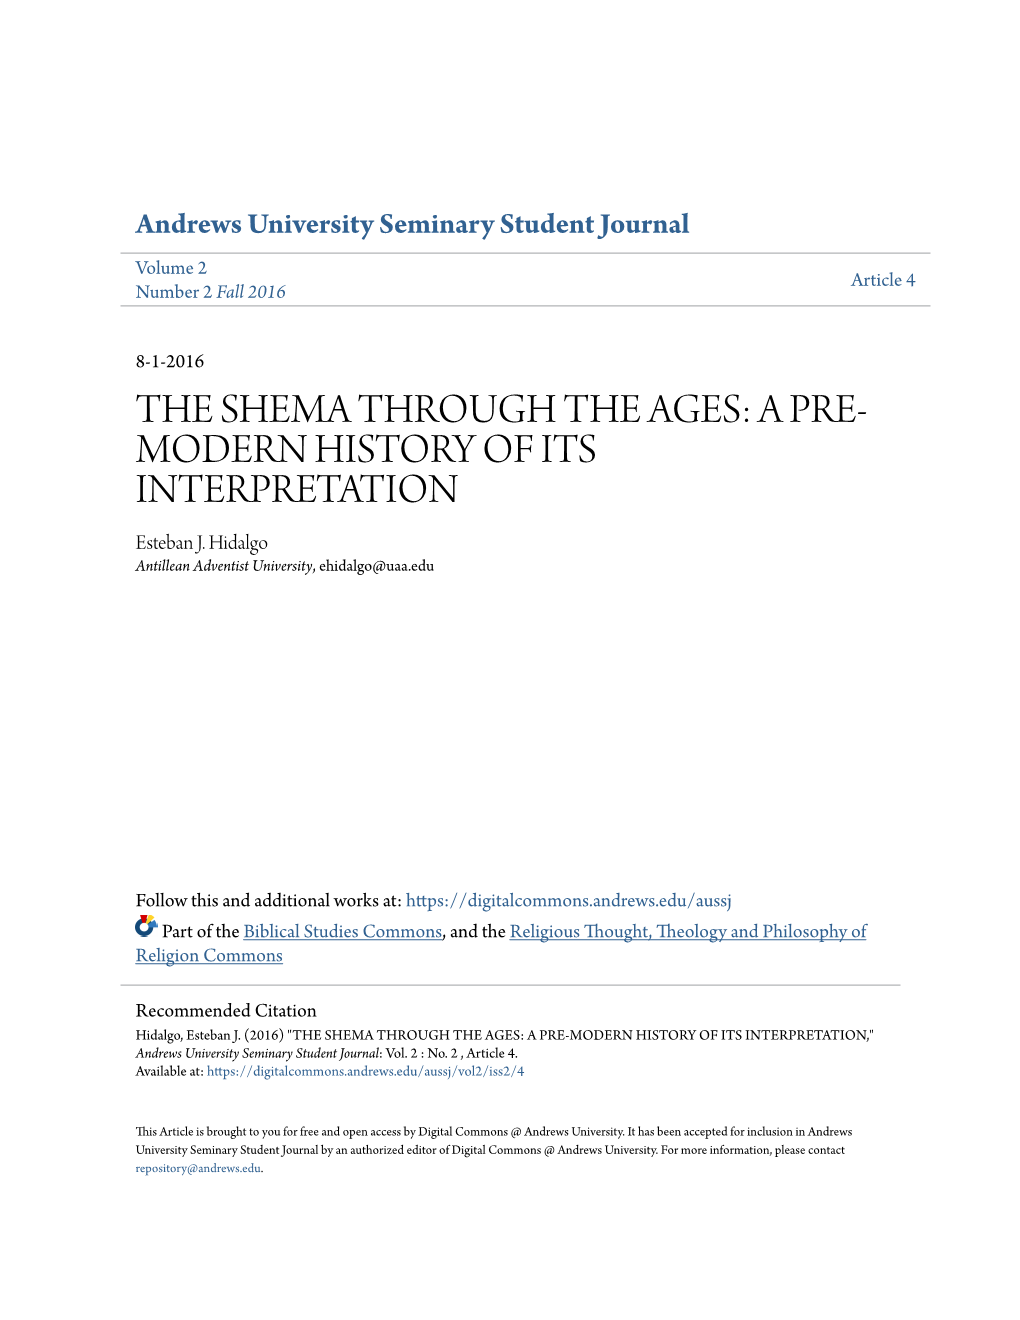 THE SHEMA THROUGH the AGES: a PRE- MODERN HISTORY of ITS INTERPRETATION Esteban J